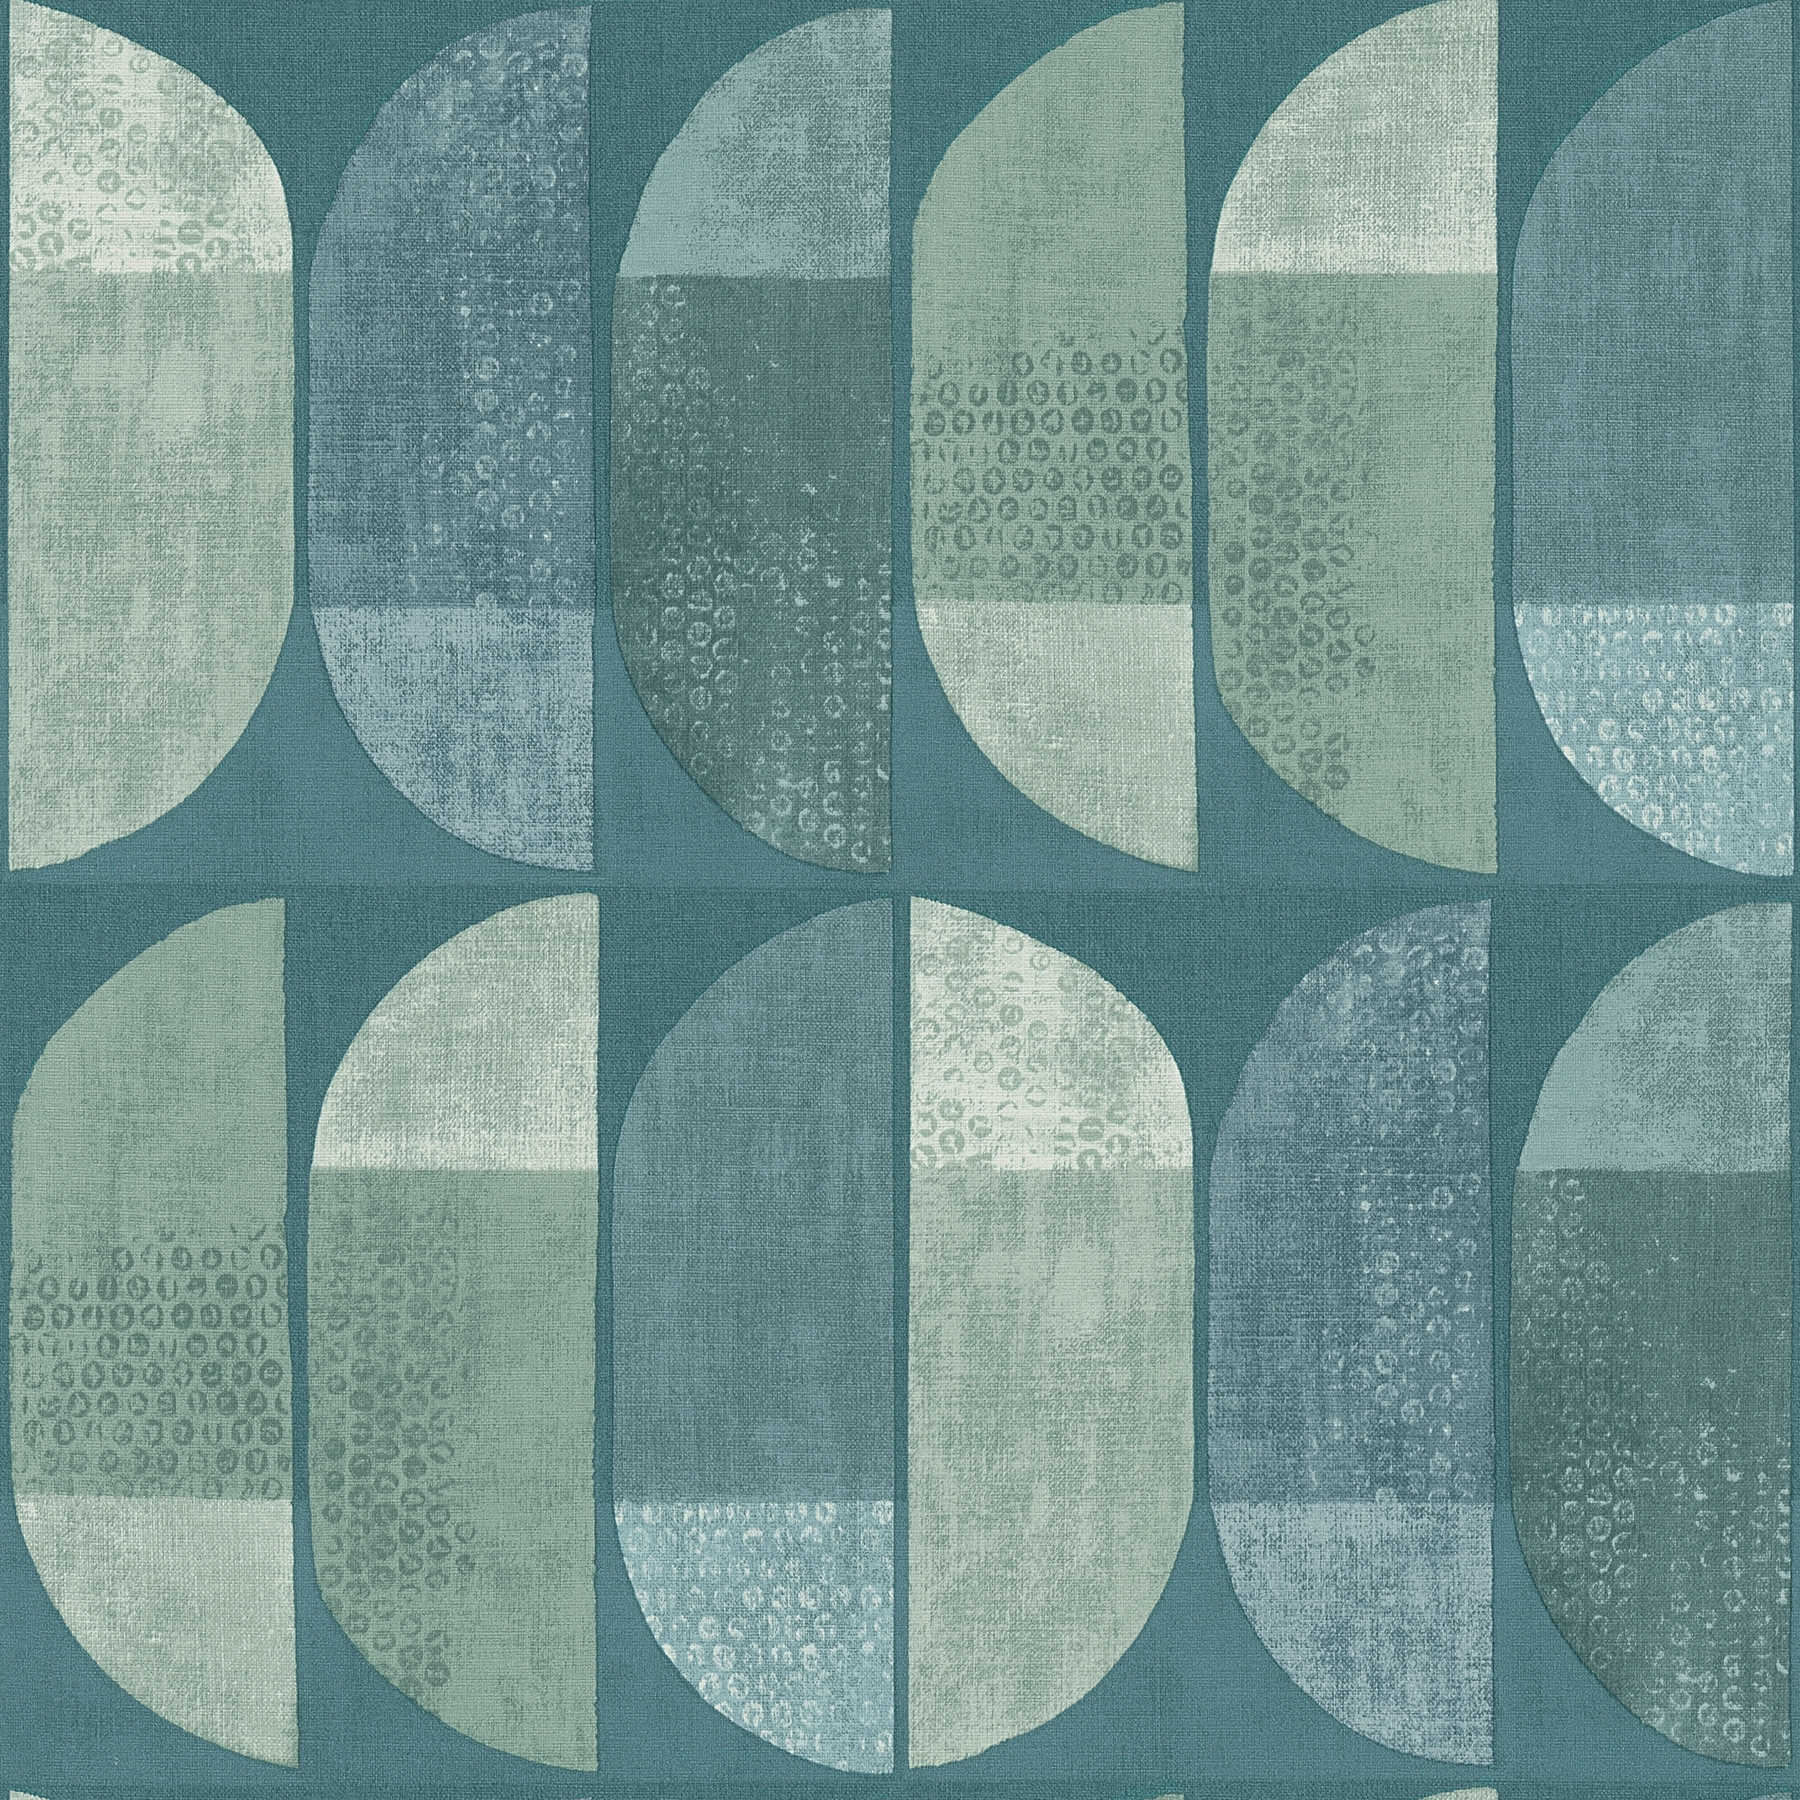 Tapete geometrisches Retro-Muster, Scandinavian Style - Blau, Grün
